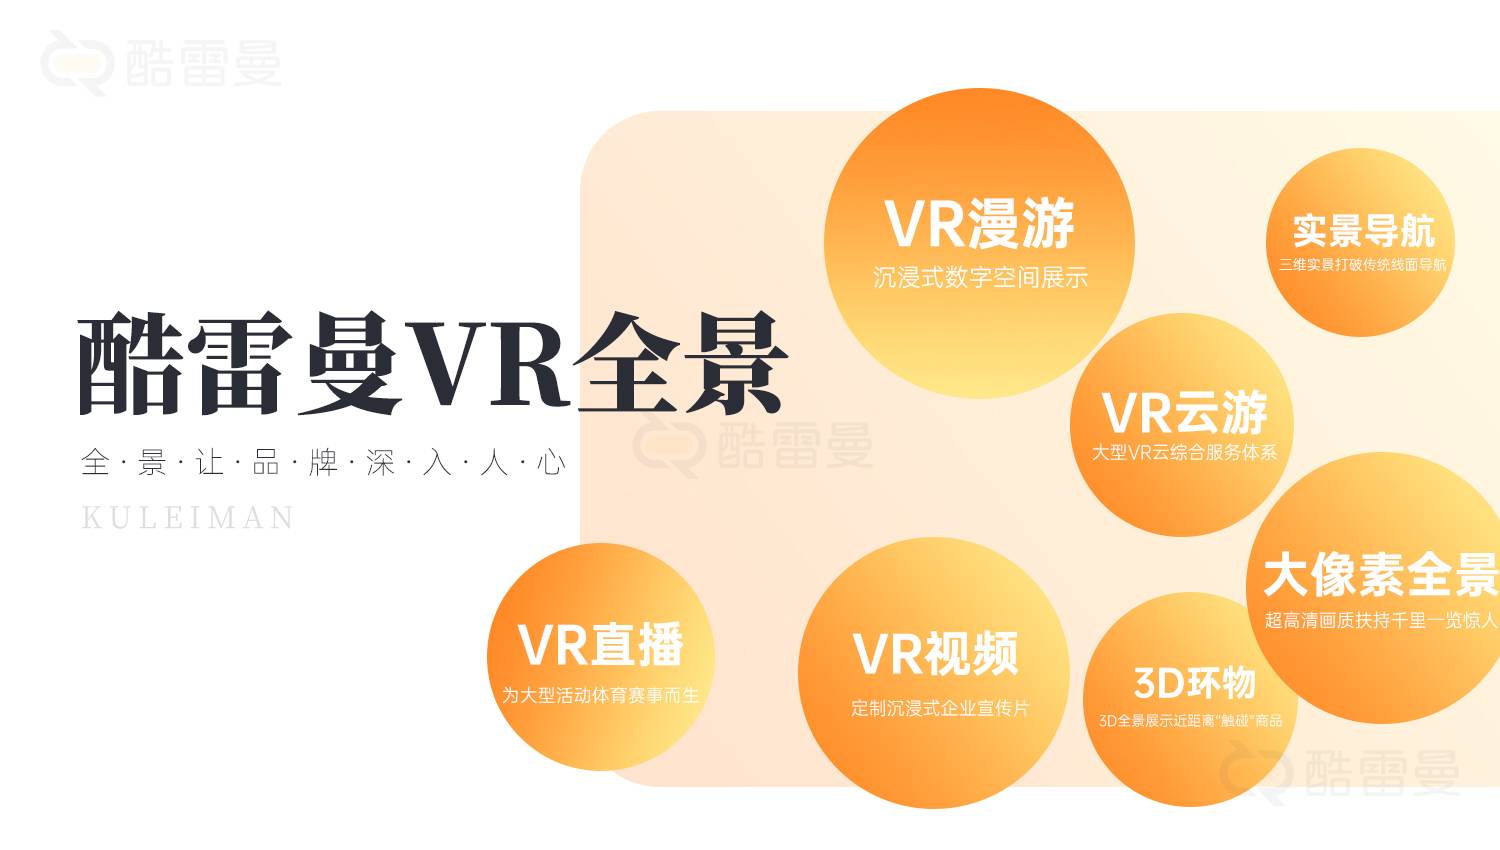 VR全景在全行业落地应用，赋能行业数字升级